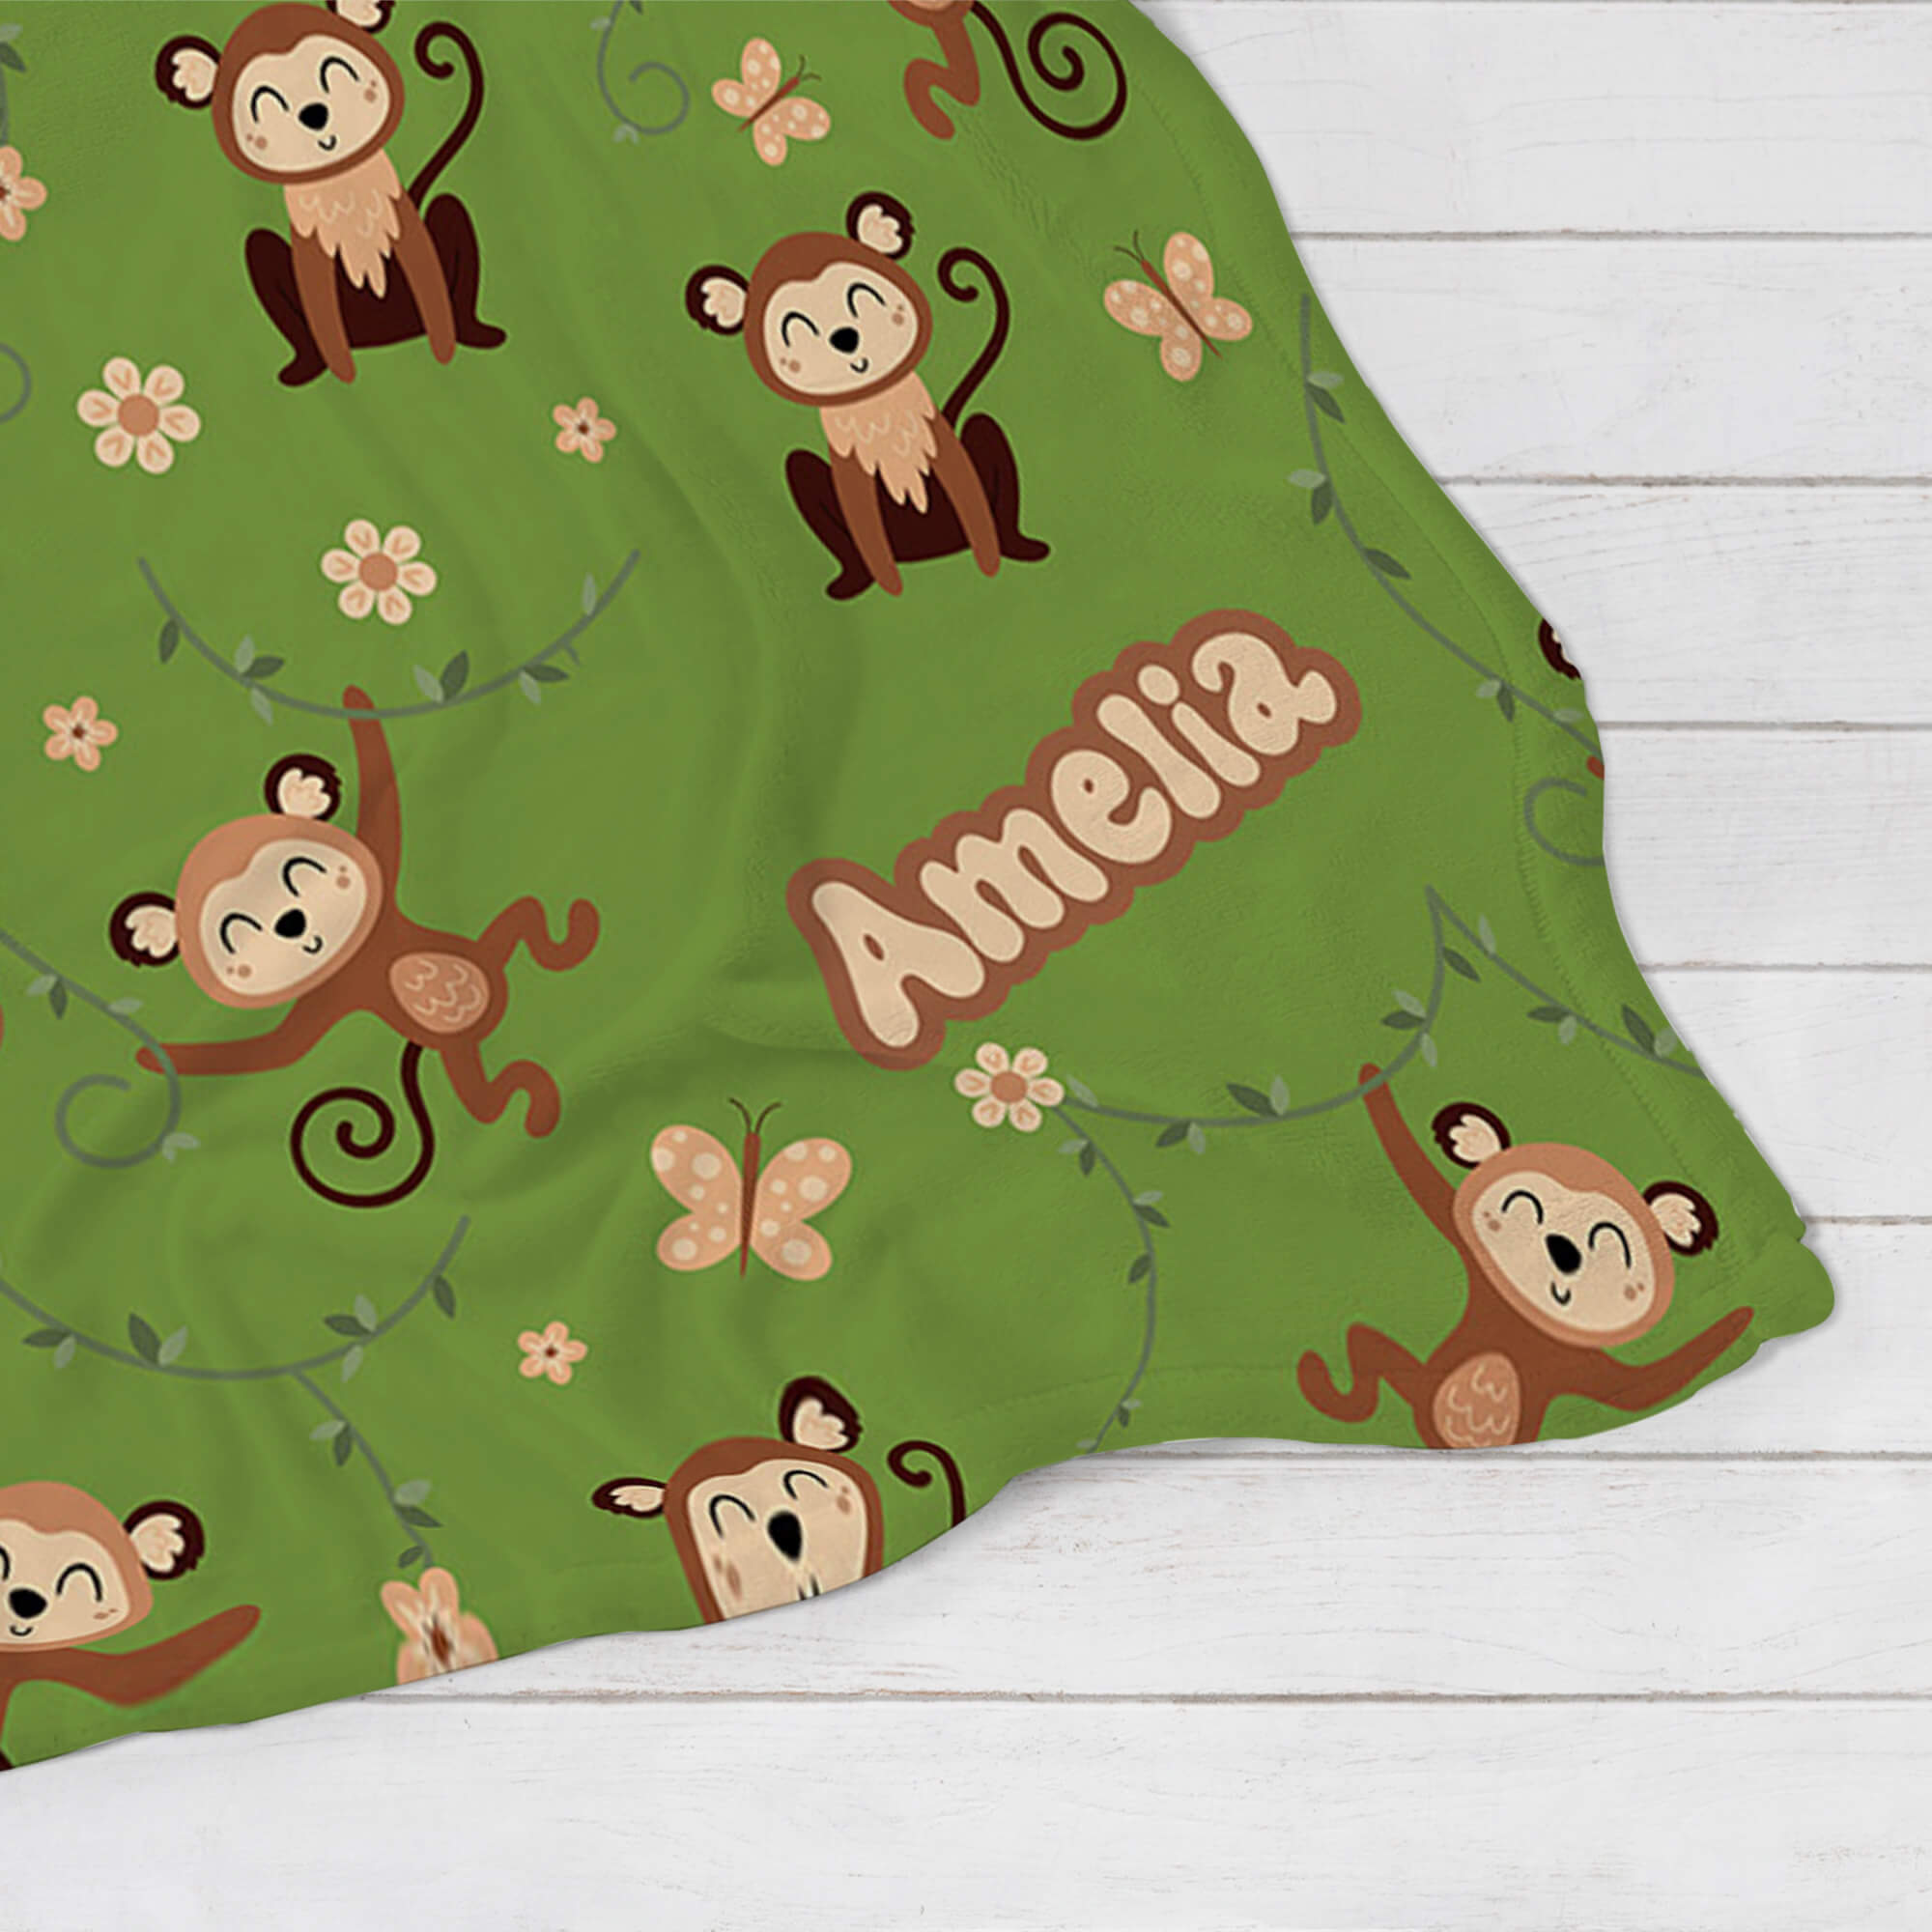 Personalized Name Blanket - Monkeys